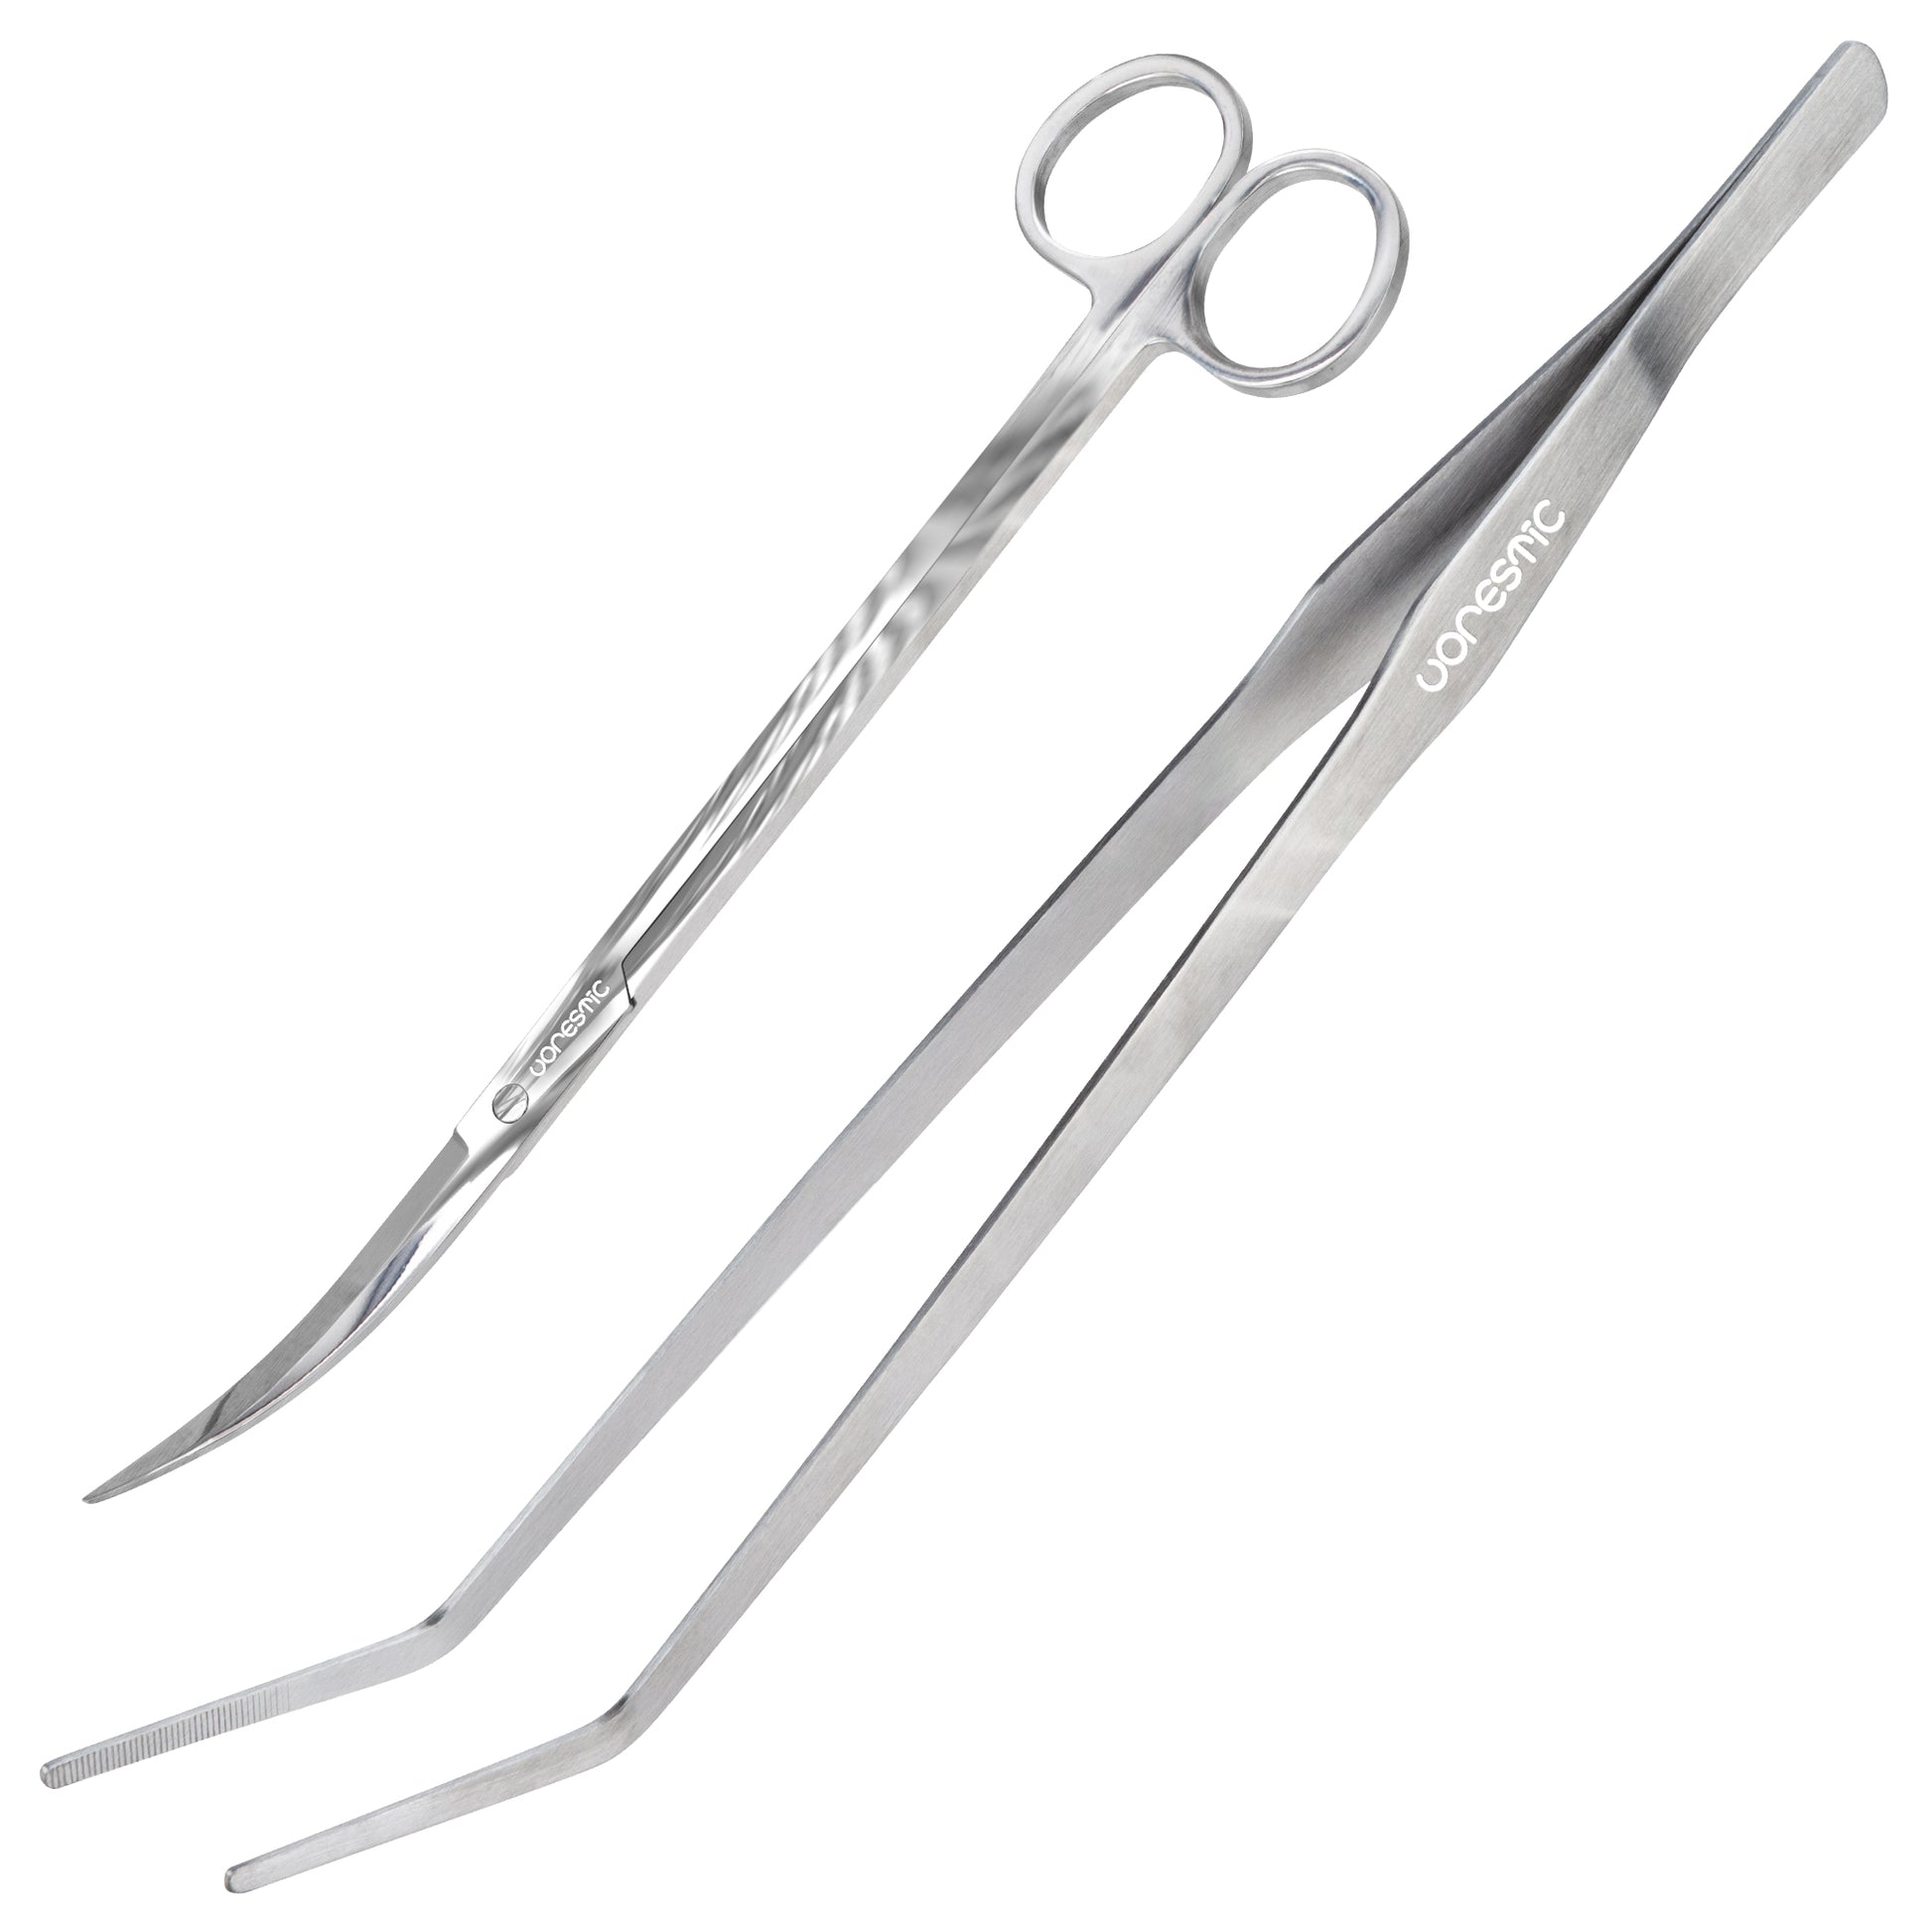 Set Curved Tweezers (38 cm) and Curved Scissors (25 cm) – Vorestic